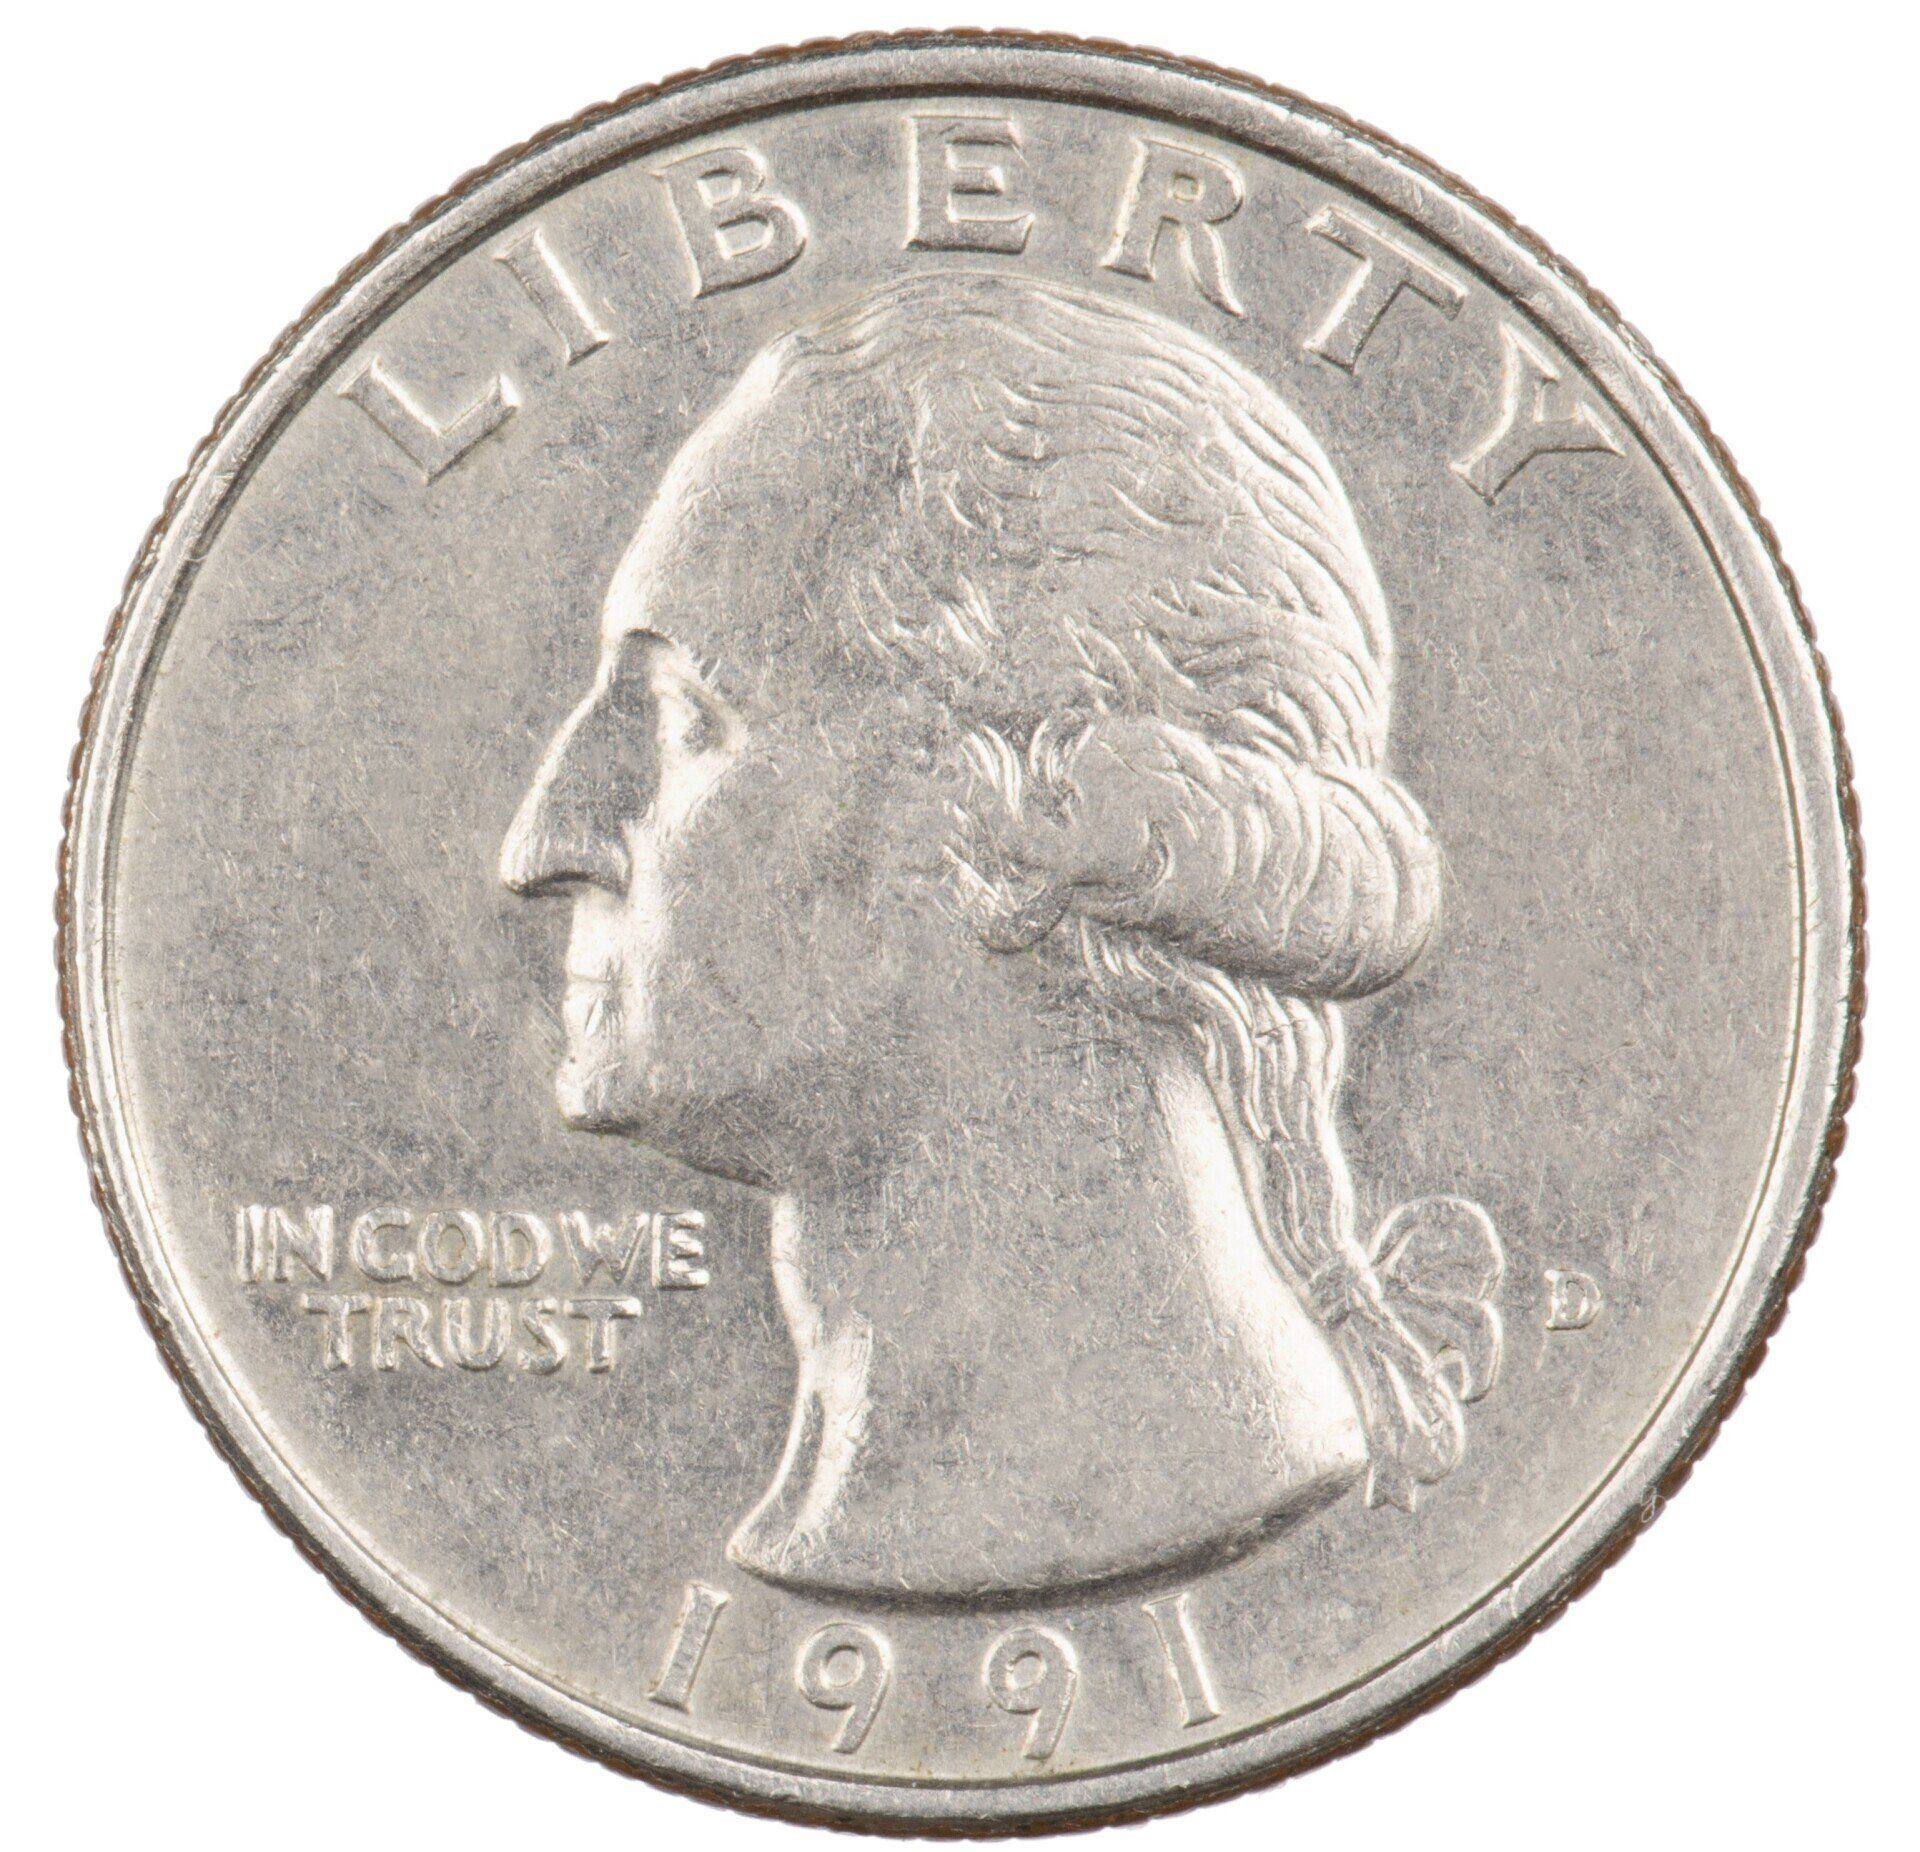 1991 Washington Quarter from the Denver Mint